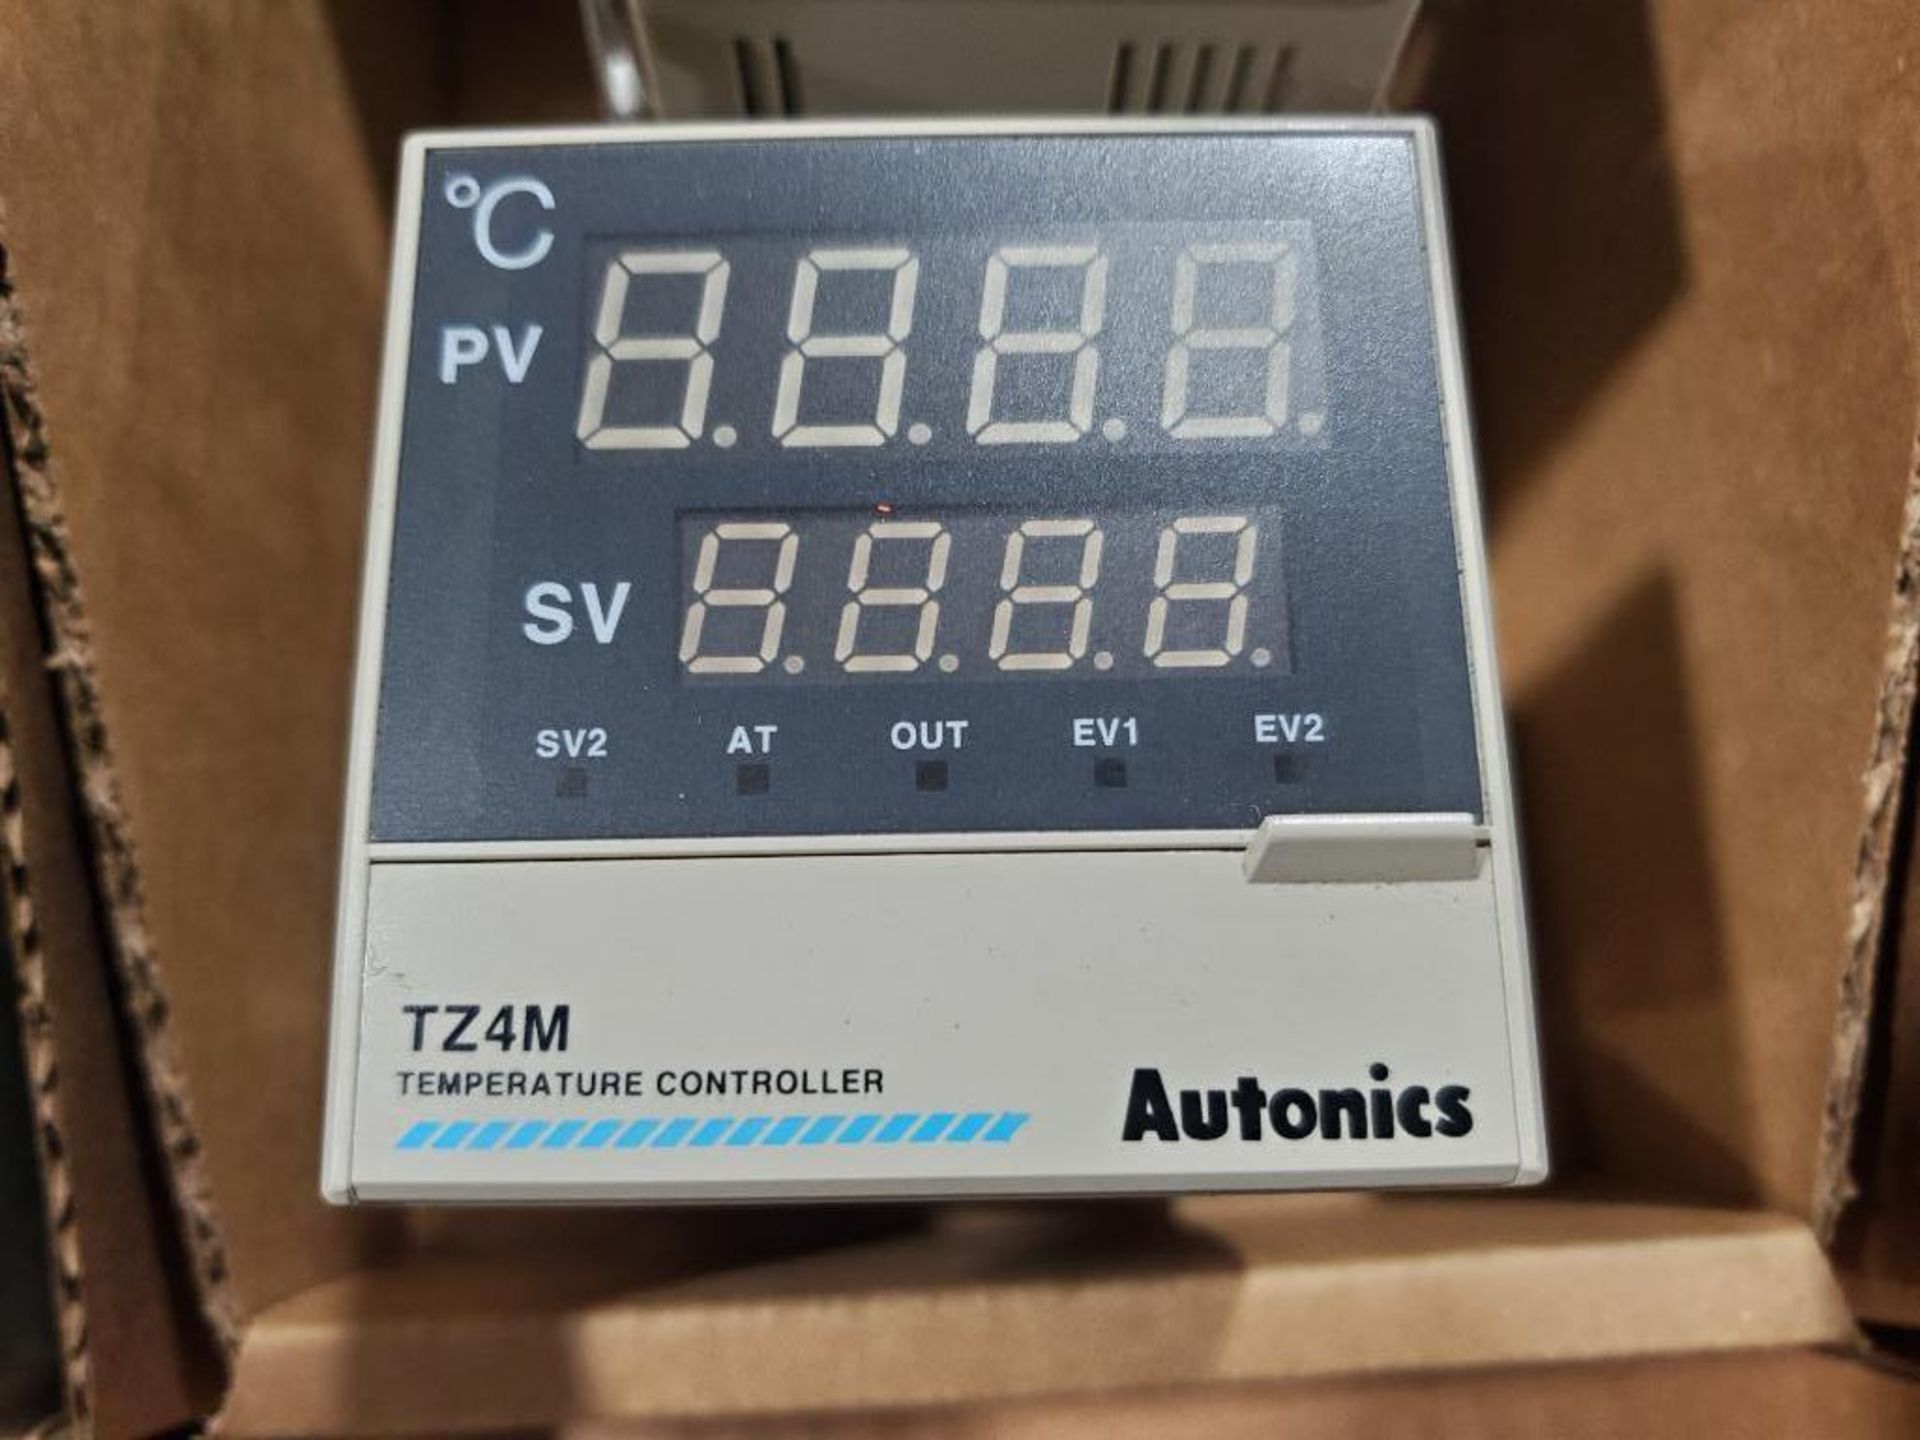 Qty 4 - Autonics temperature controllers. Model TZ4M. Part number TZ4M-B4S. - Image 2 of 6